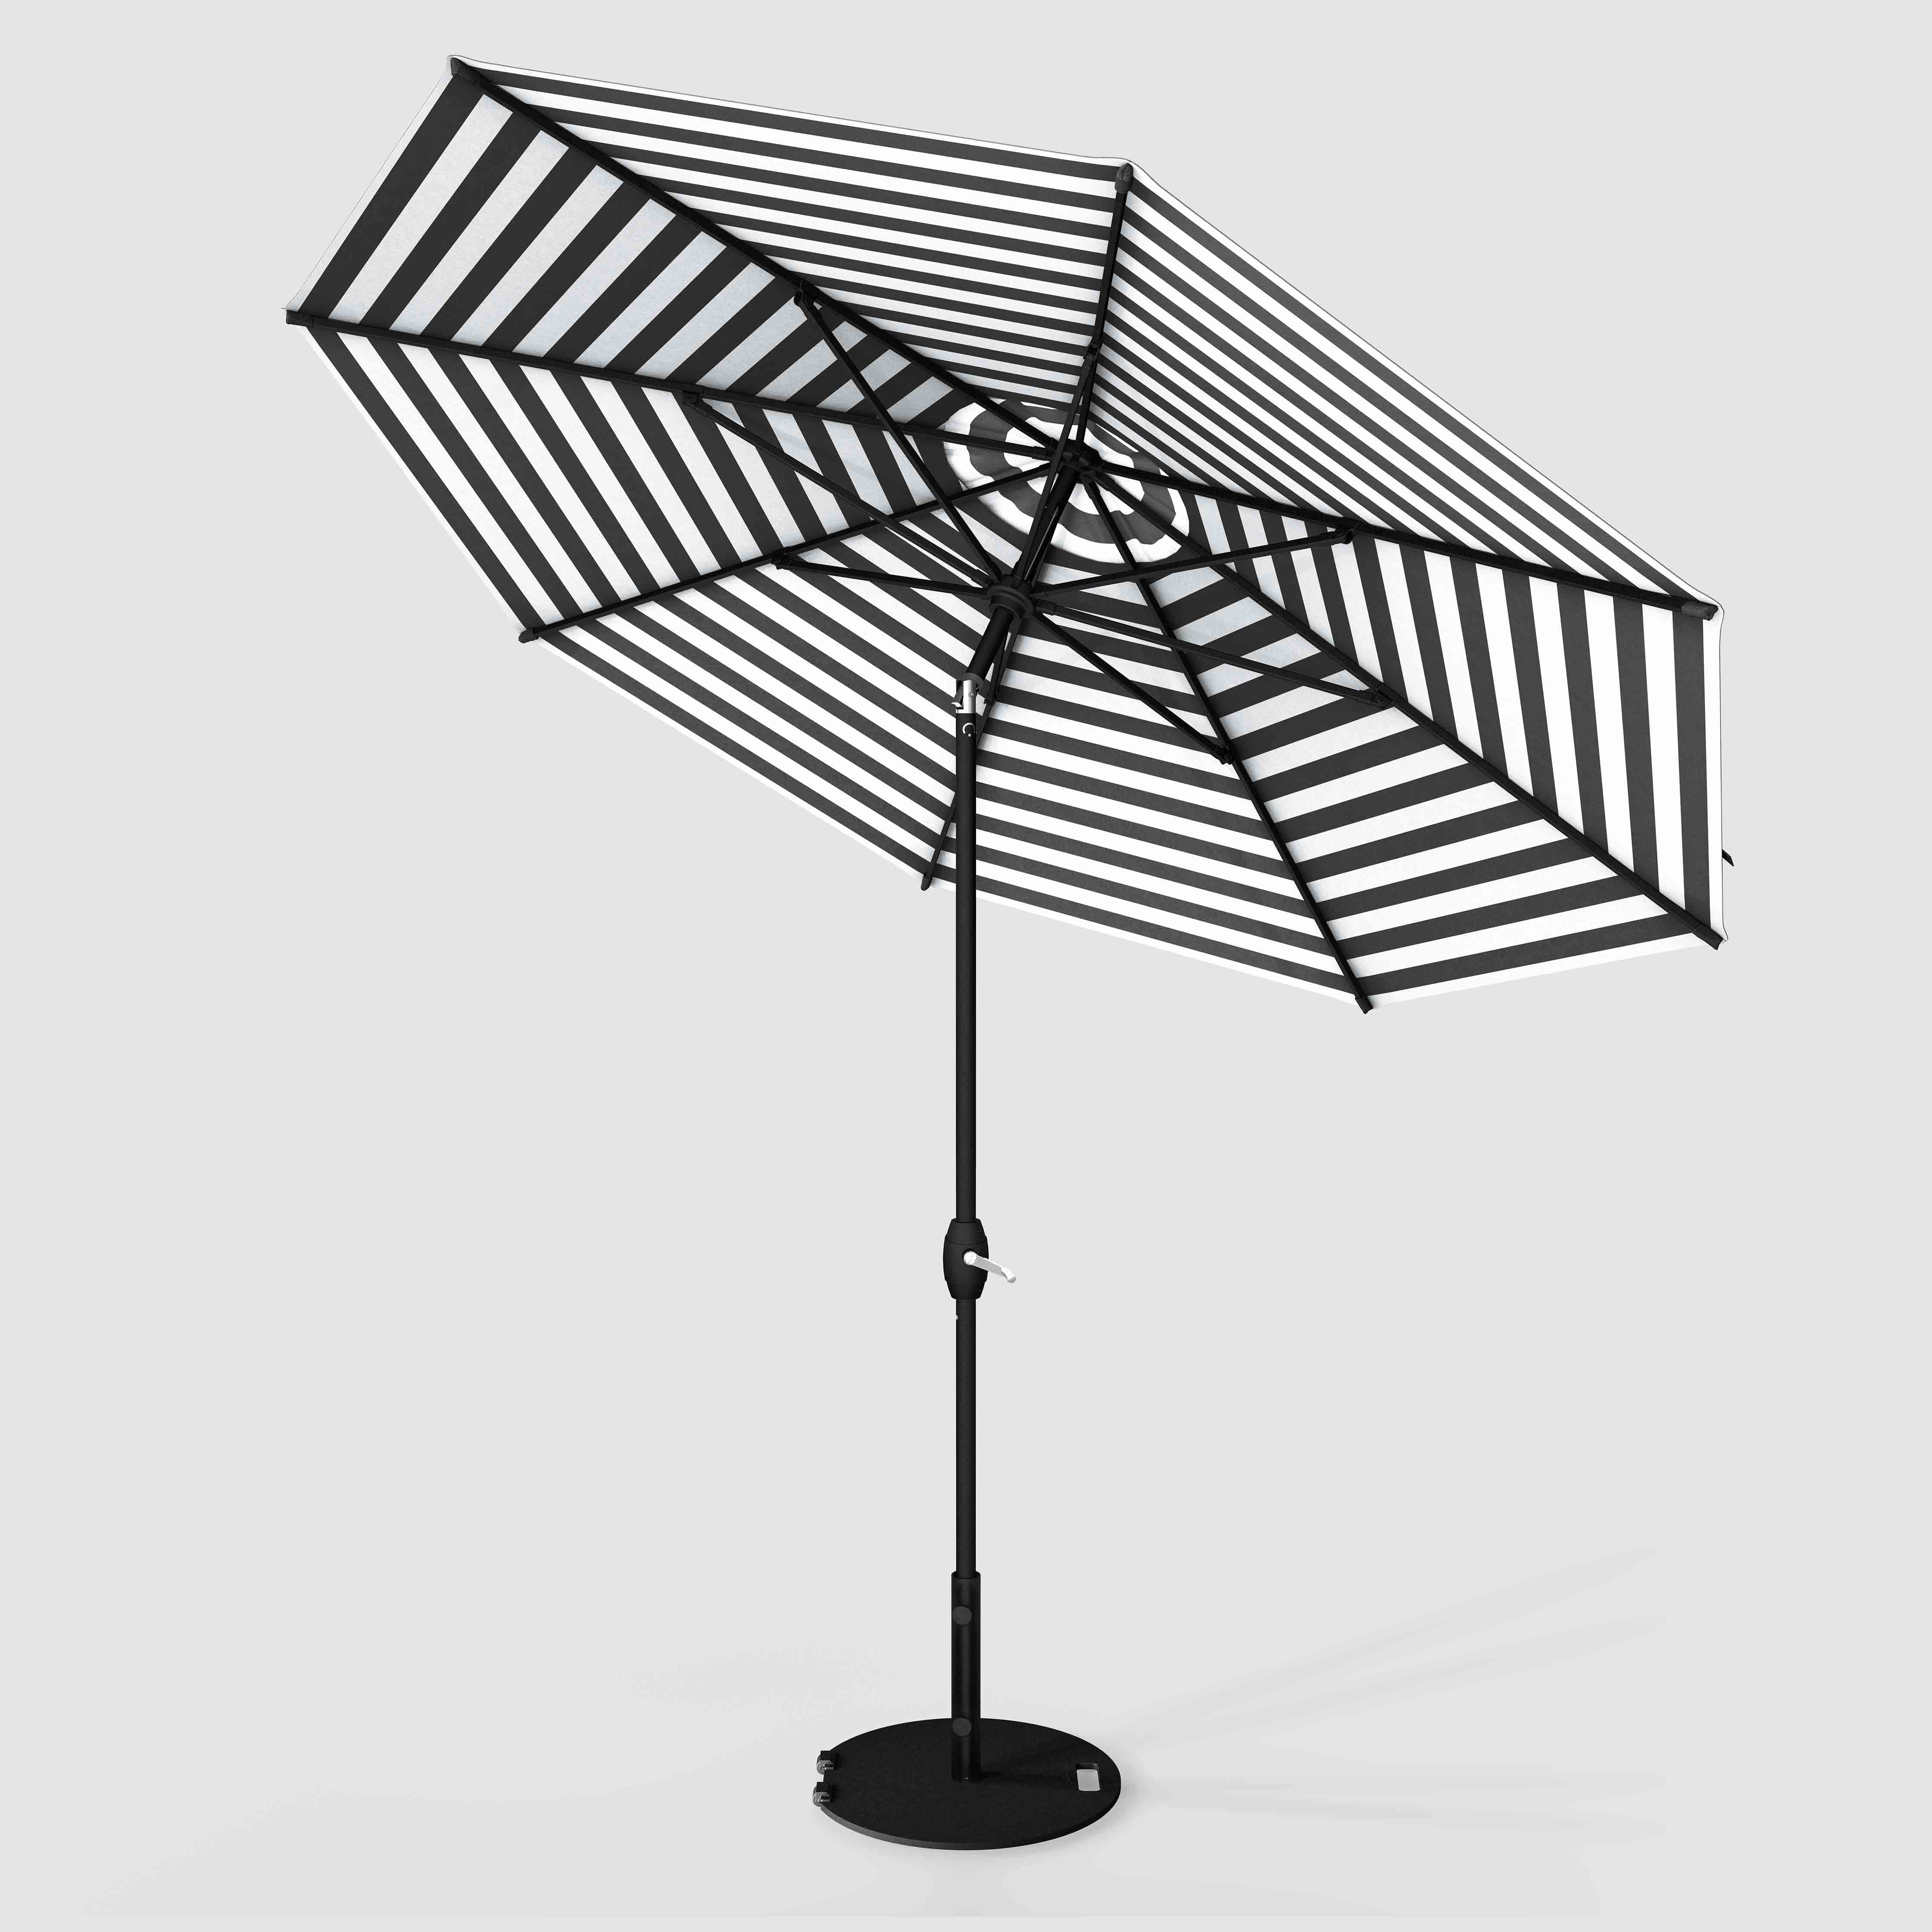 6ft-10ft Economical Auto-Tilt Terylast Patio Umbrella | 60 Colors Available | Durable Aluminum Frame & Ribs